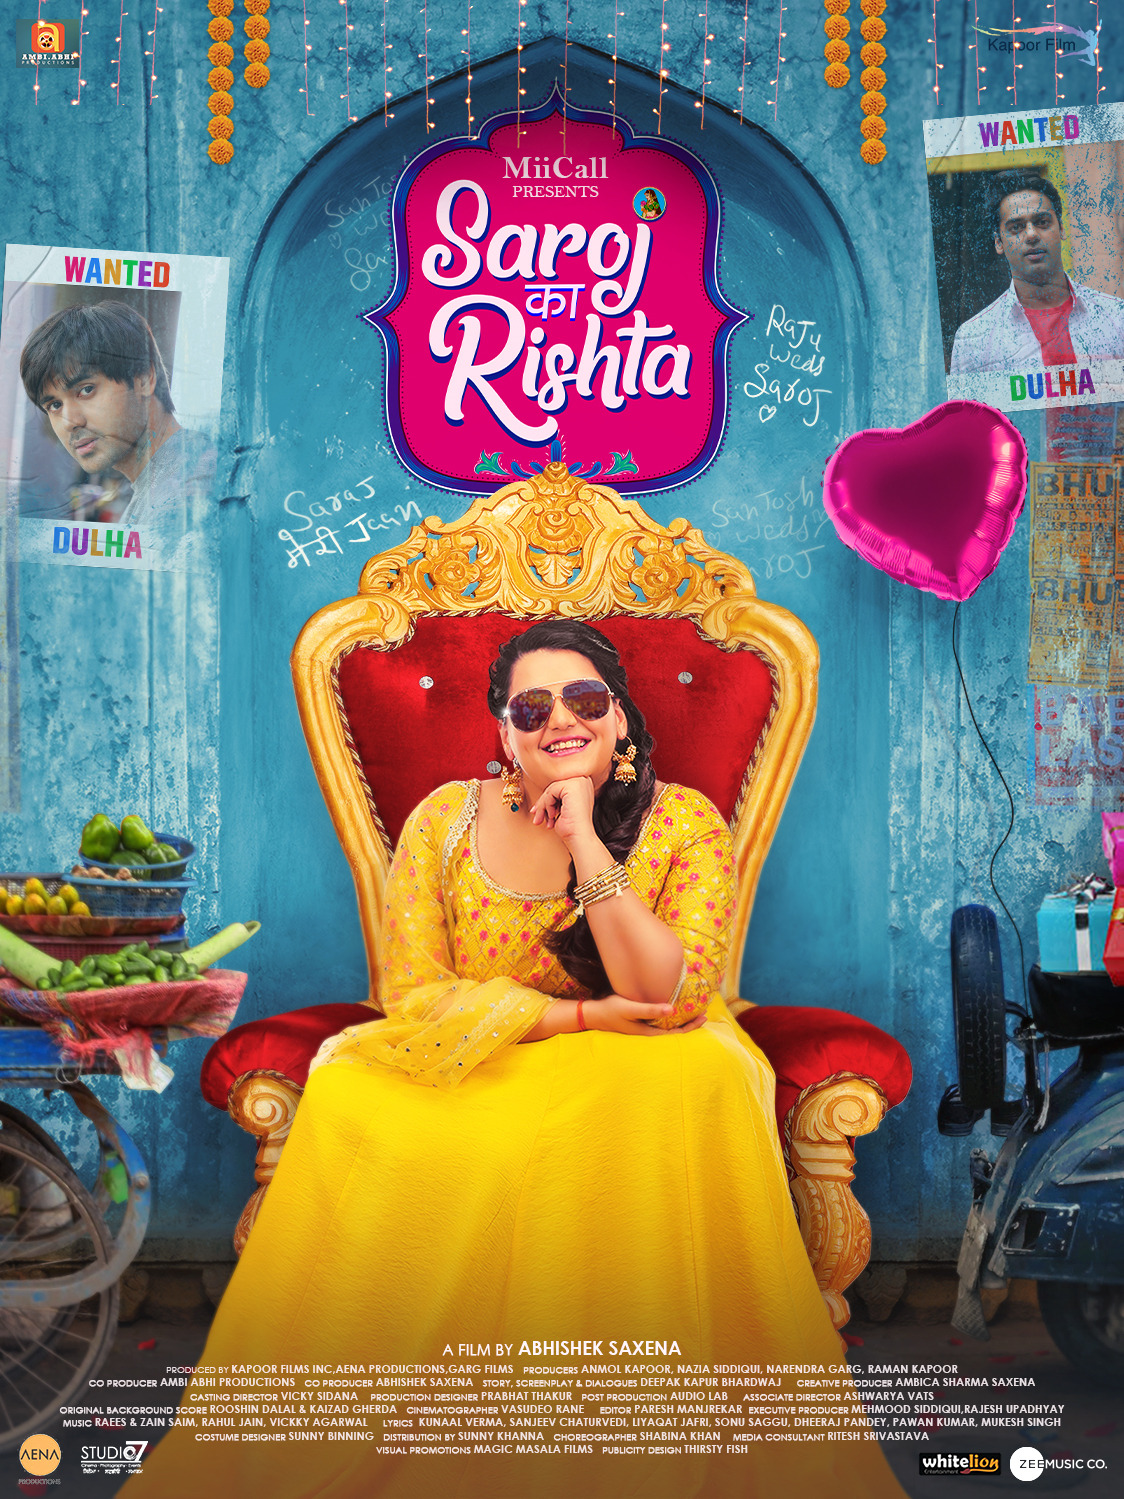 Extra Large Movie Poster Image for Saroj Ka Rishta (#2 of 2)